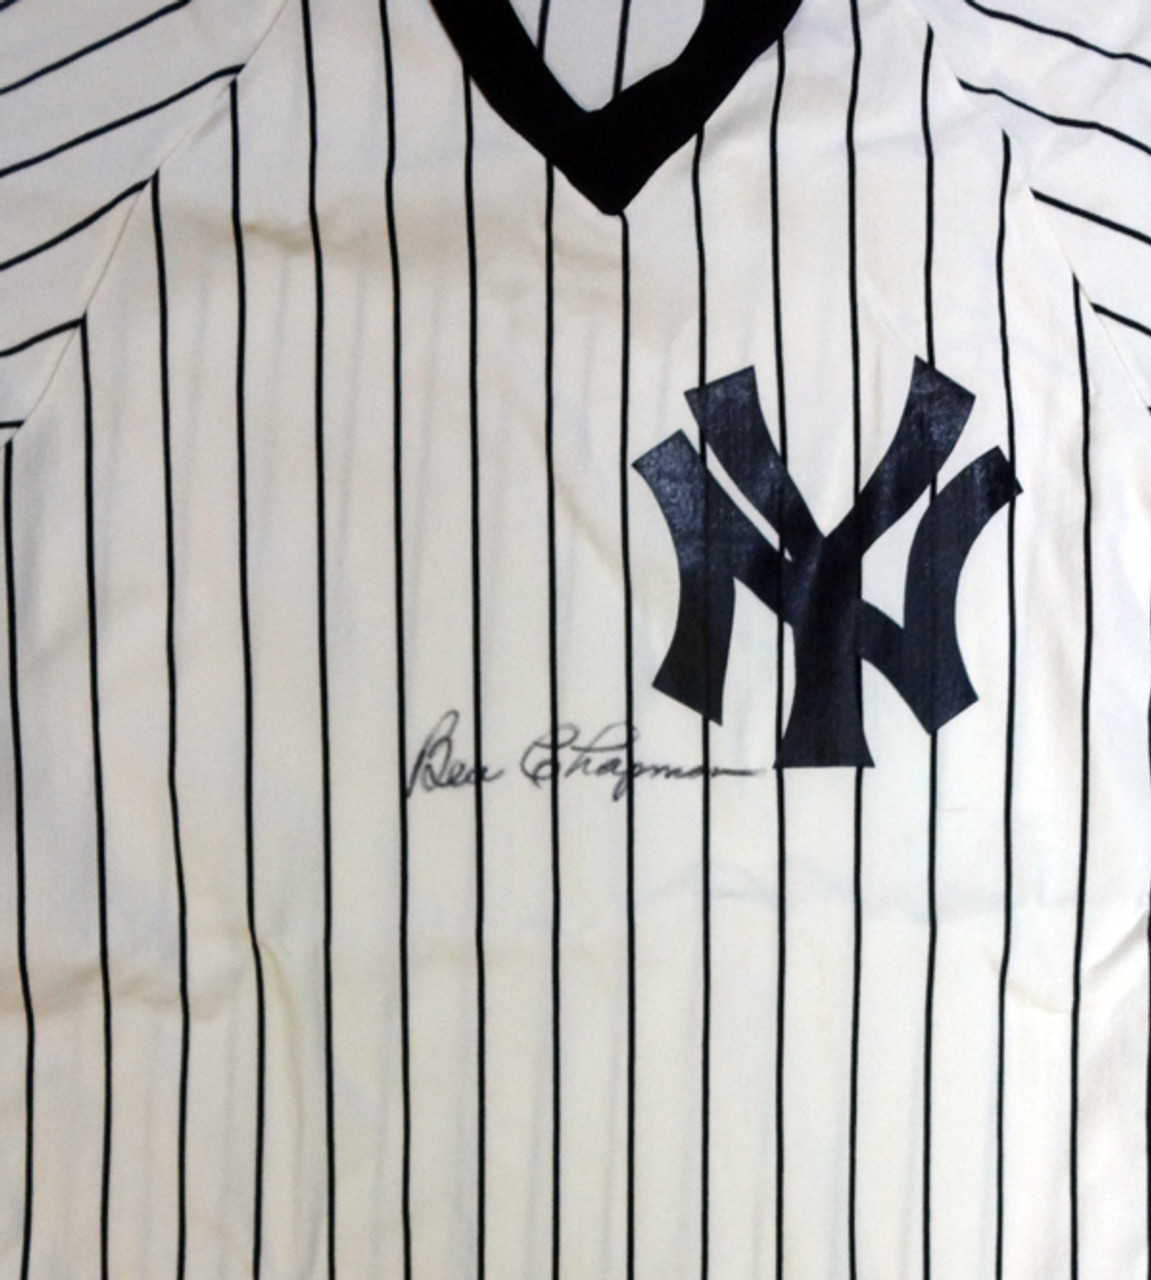 New York Yankees Ben Chapman Autographed White Jersey PSA/DNA #W07959